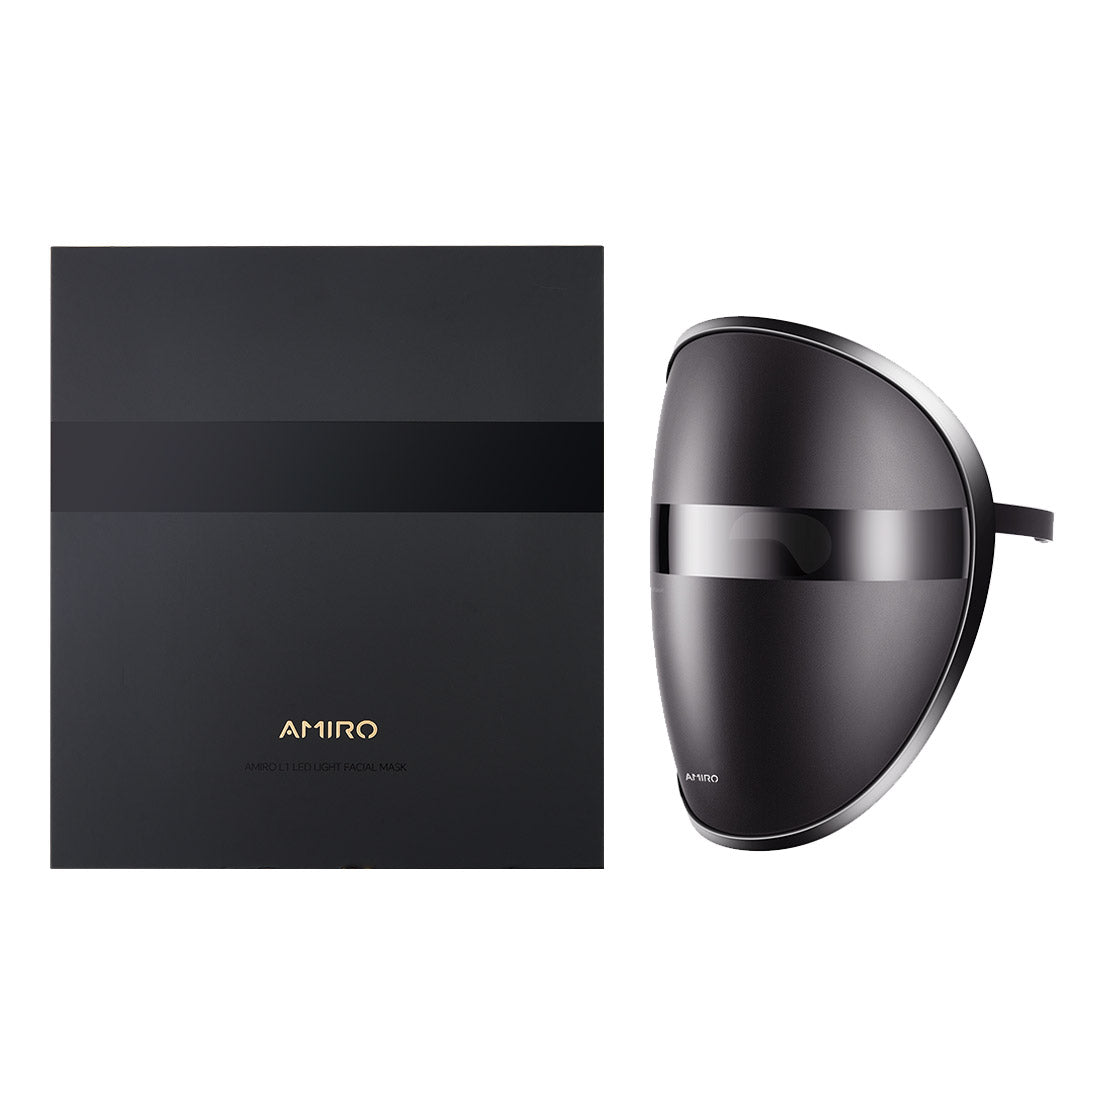 AMIRO L1 LED Light Therapy Facial Mask - Black